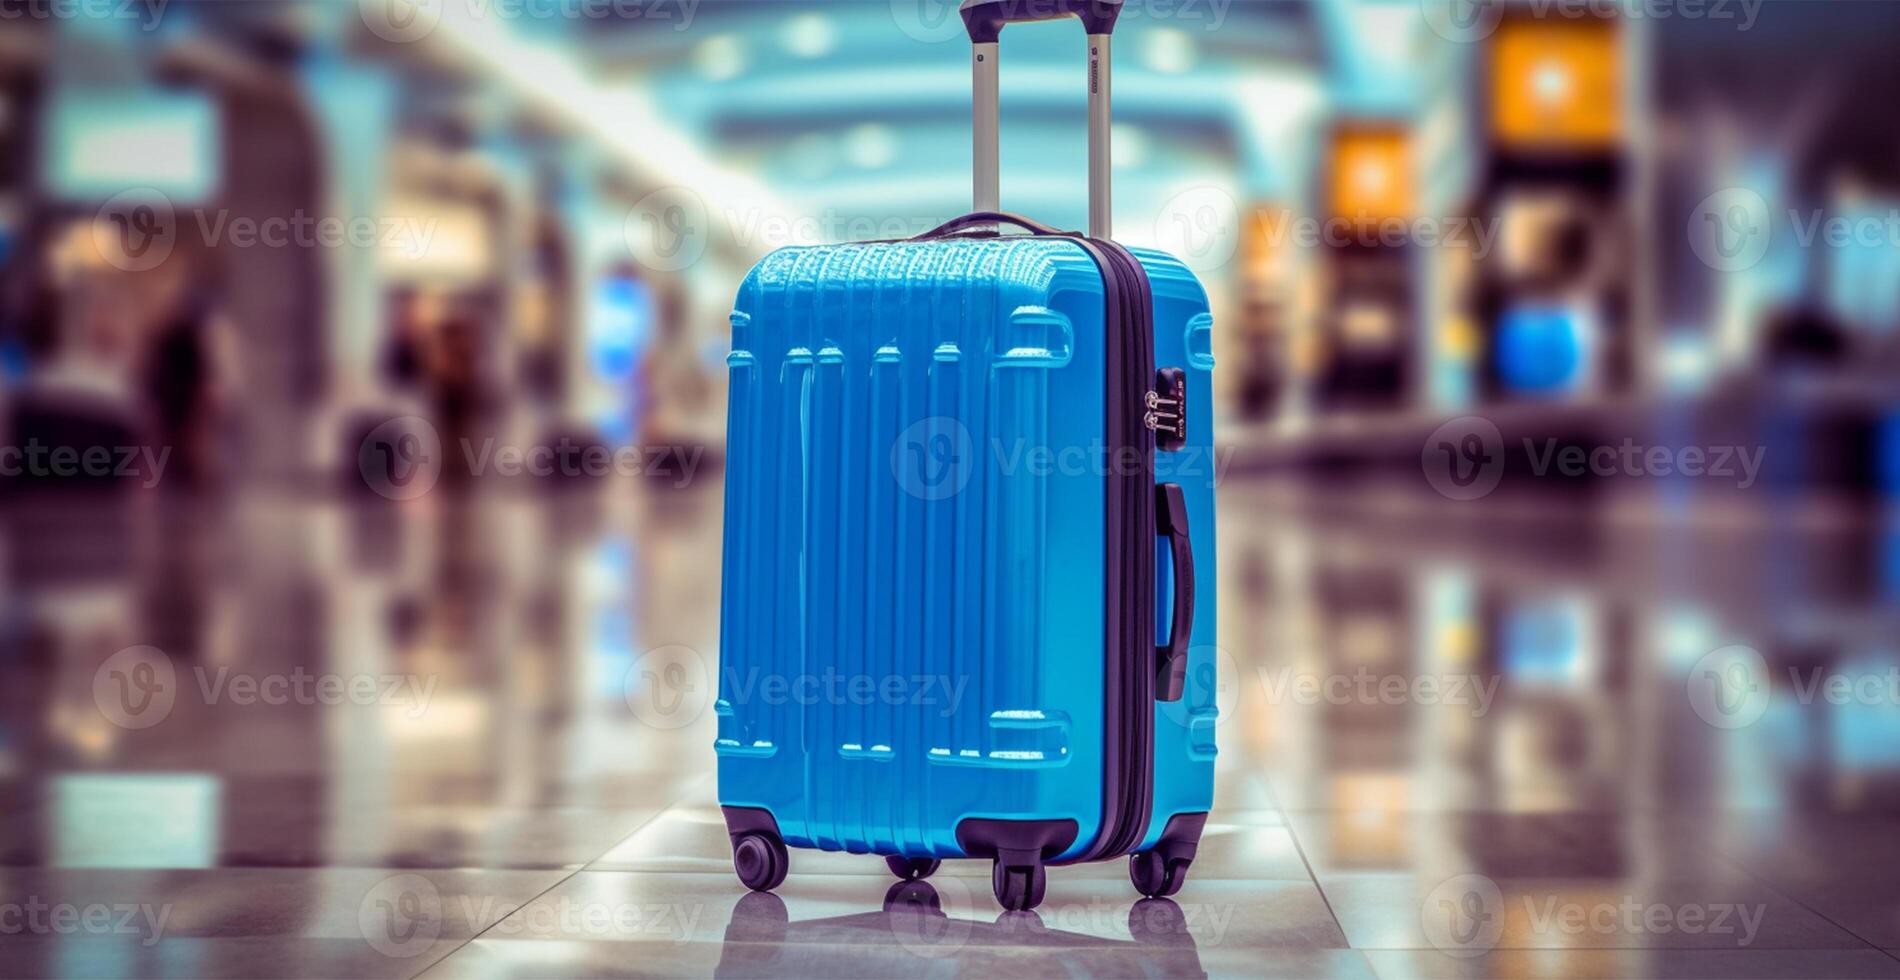 Blue suitcase, airport luggage - image photo